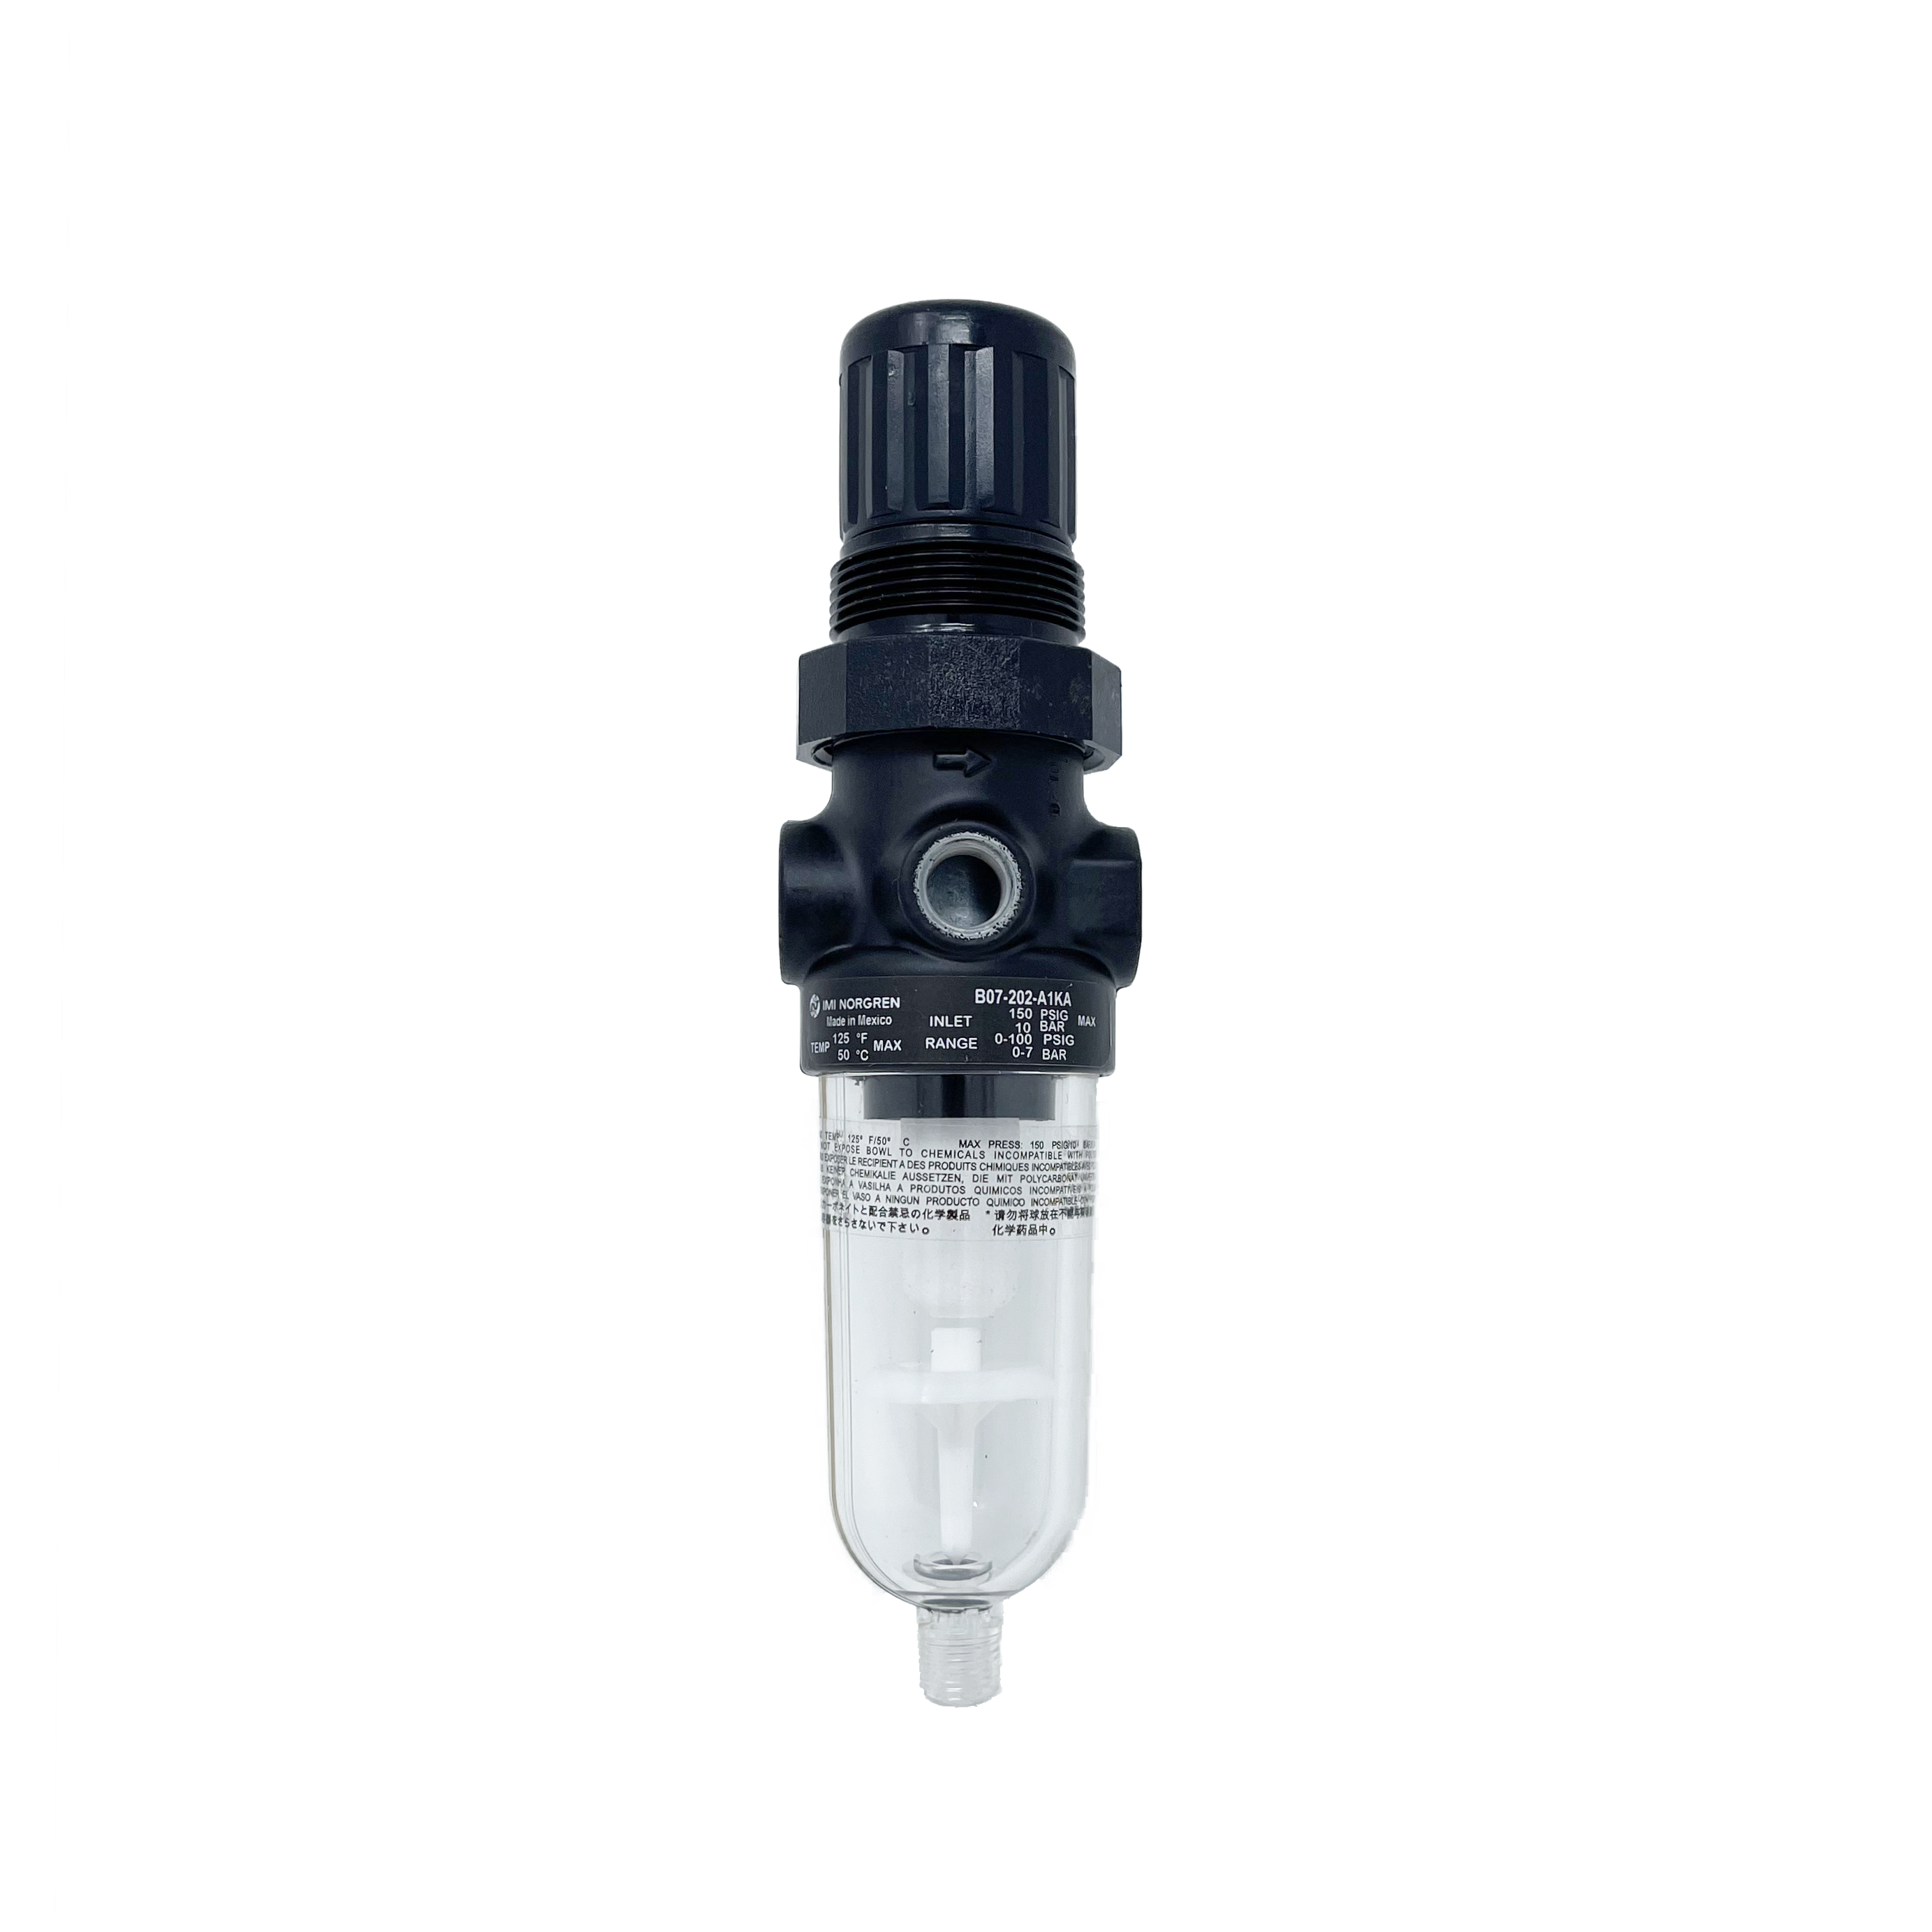 B07-202-M1KA : Norgren B07 Series Filter/Regulator, Relieving, with Gauge, Manual Drain, 5-Micron, 5 to 100 PSI Range